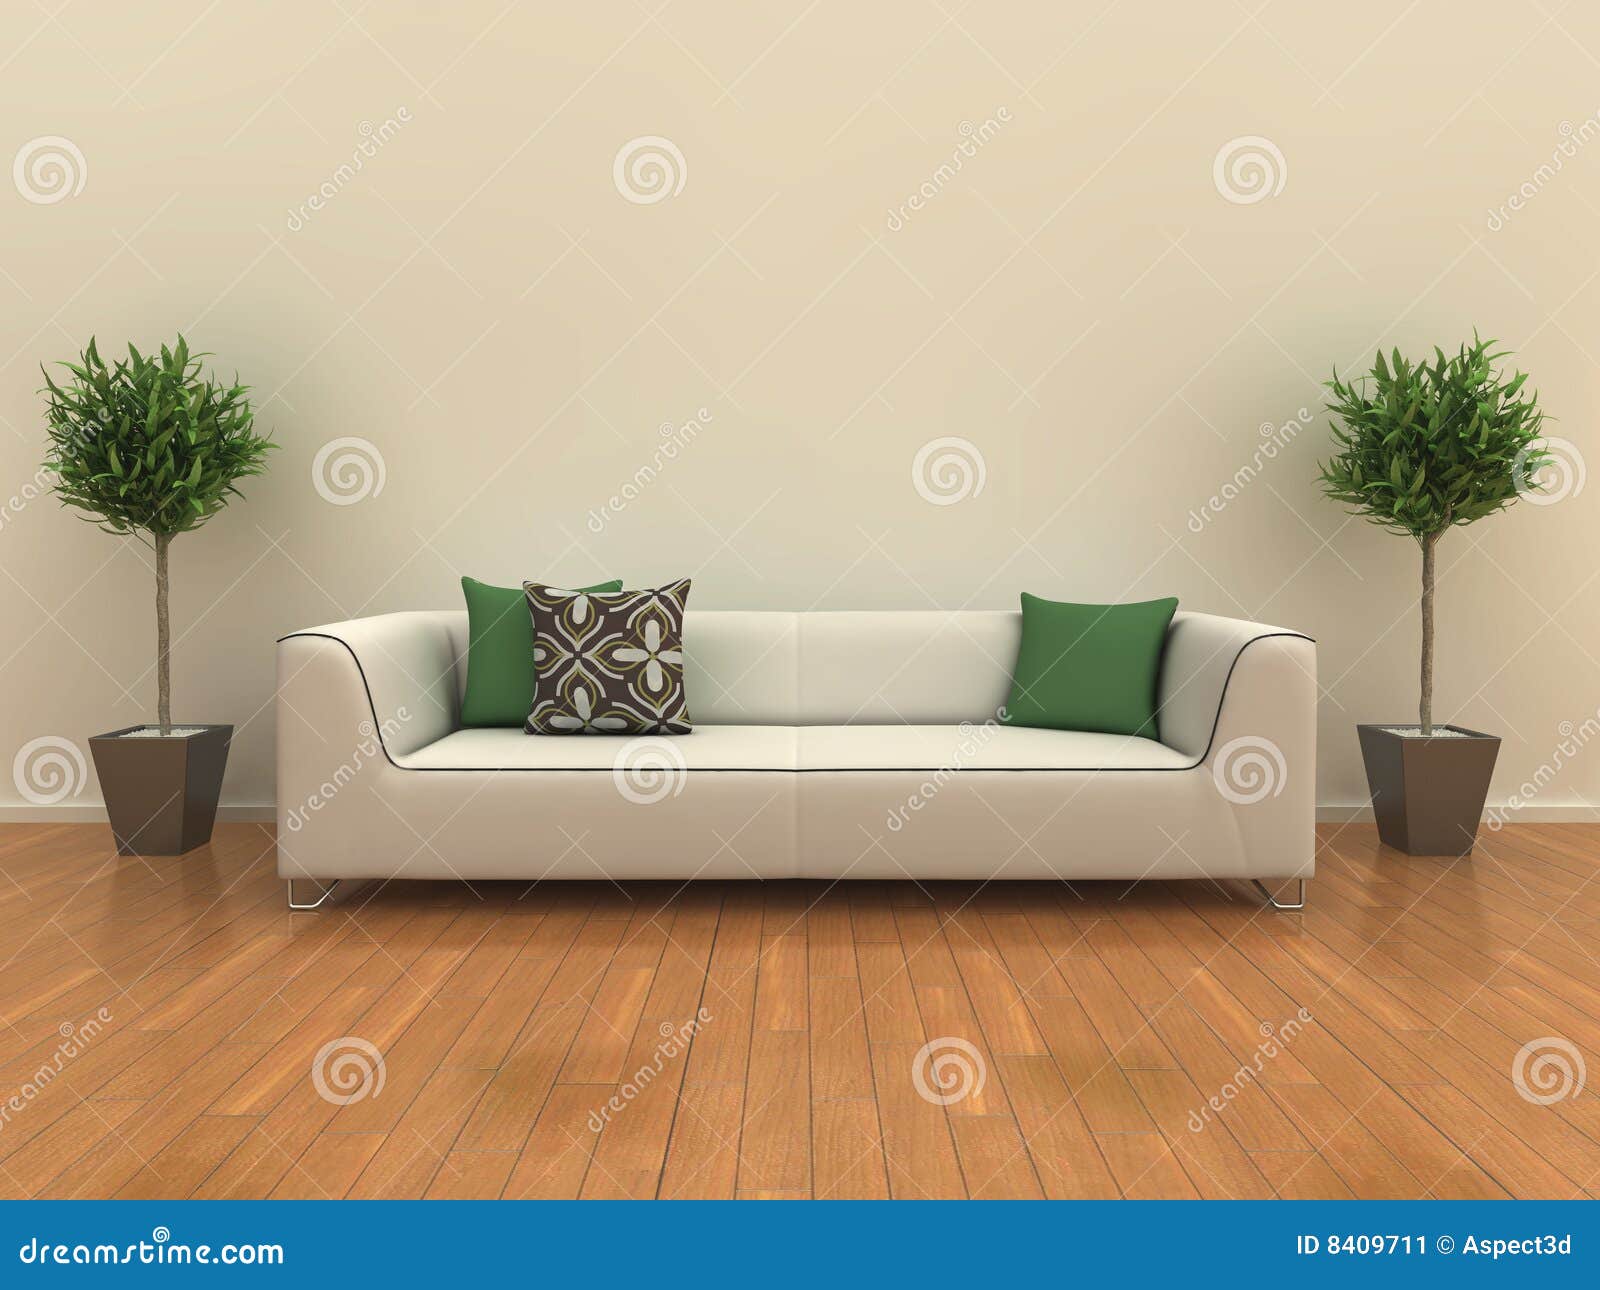 Plante le sofa illustration stock. Illustration du contemporain - 8409711